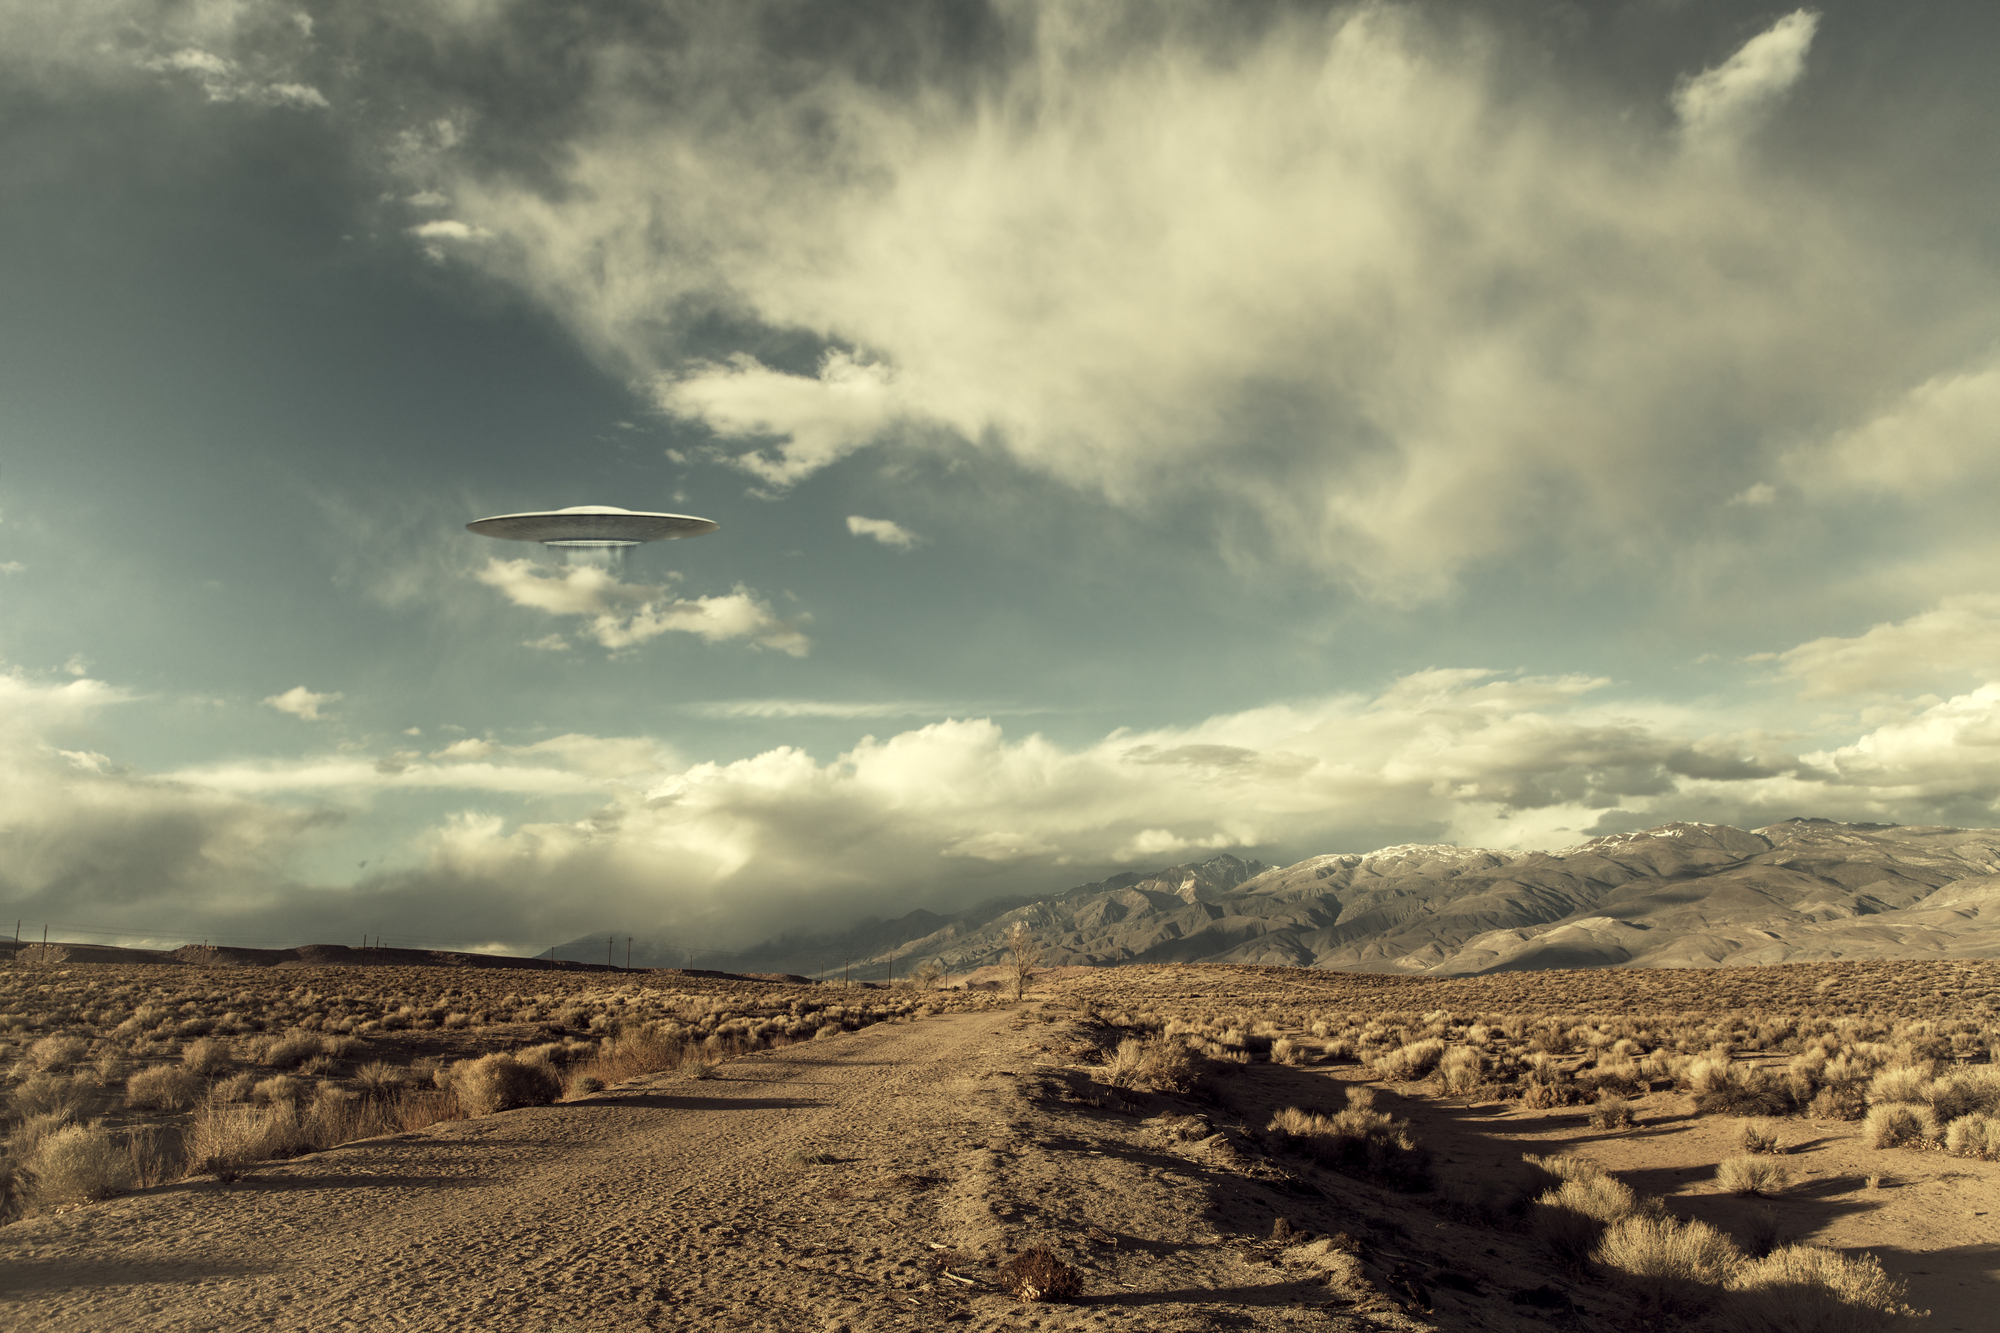 image of ufo hovering over desert road